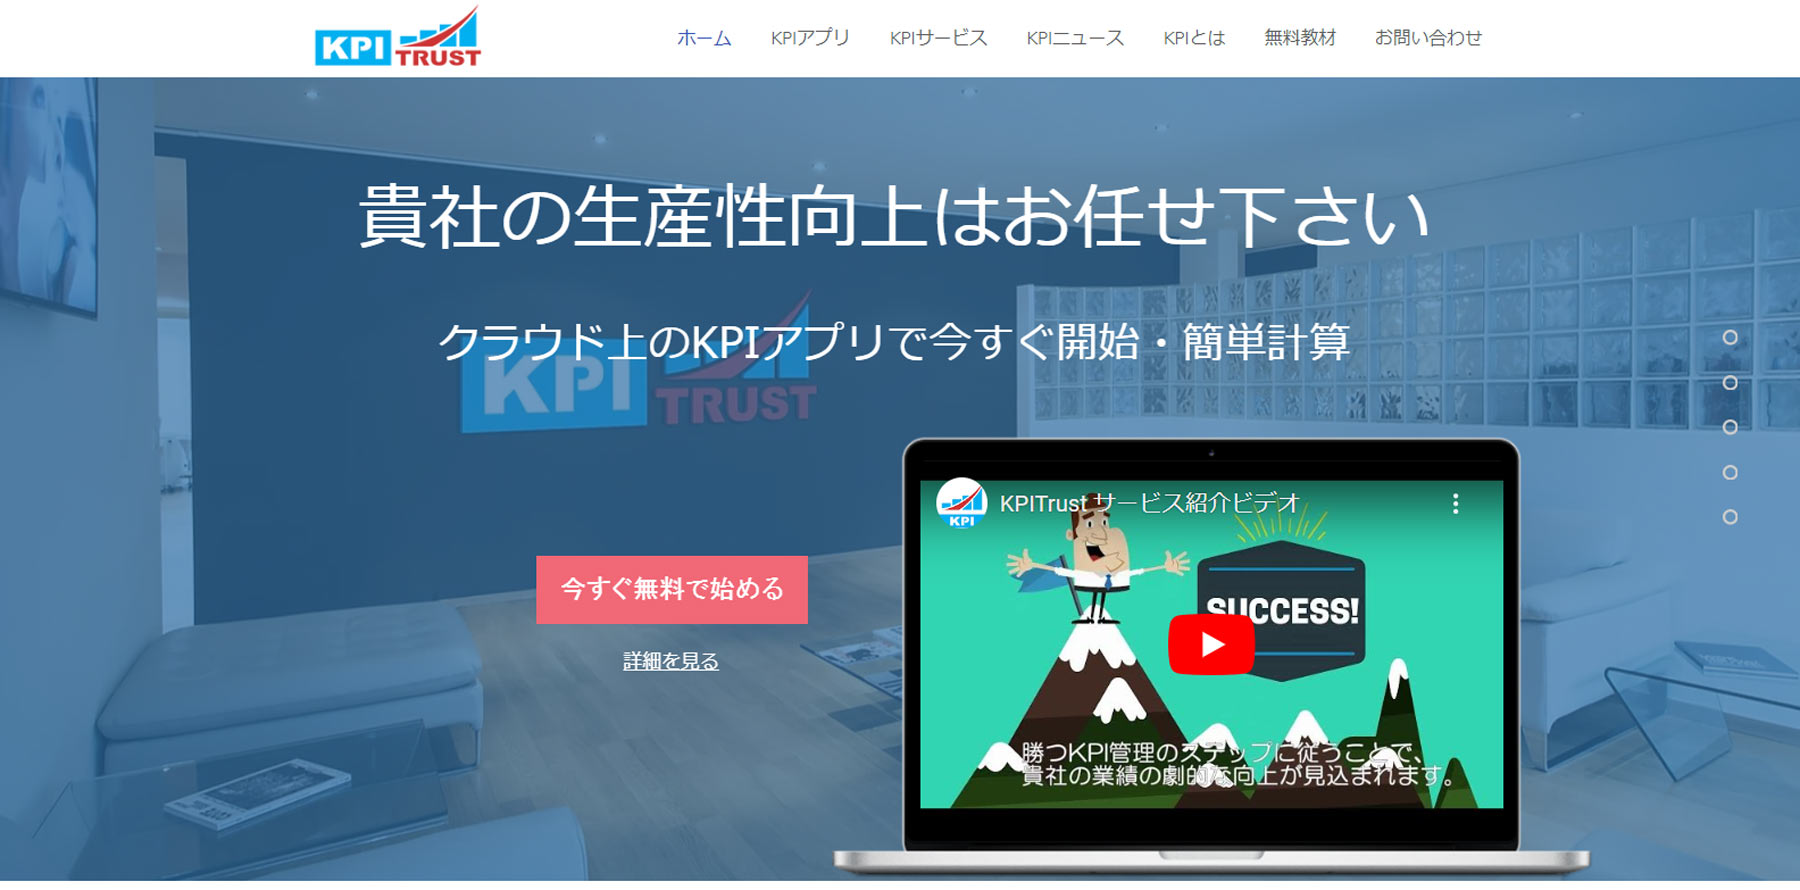 KPI Trust公式Webサイト